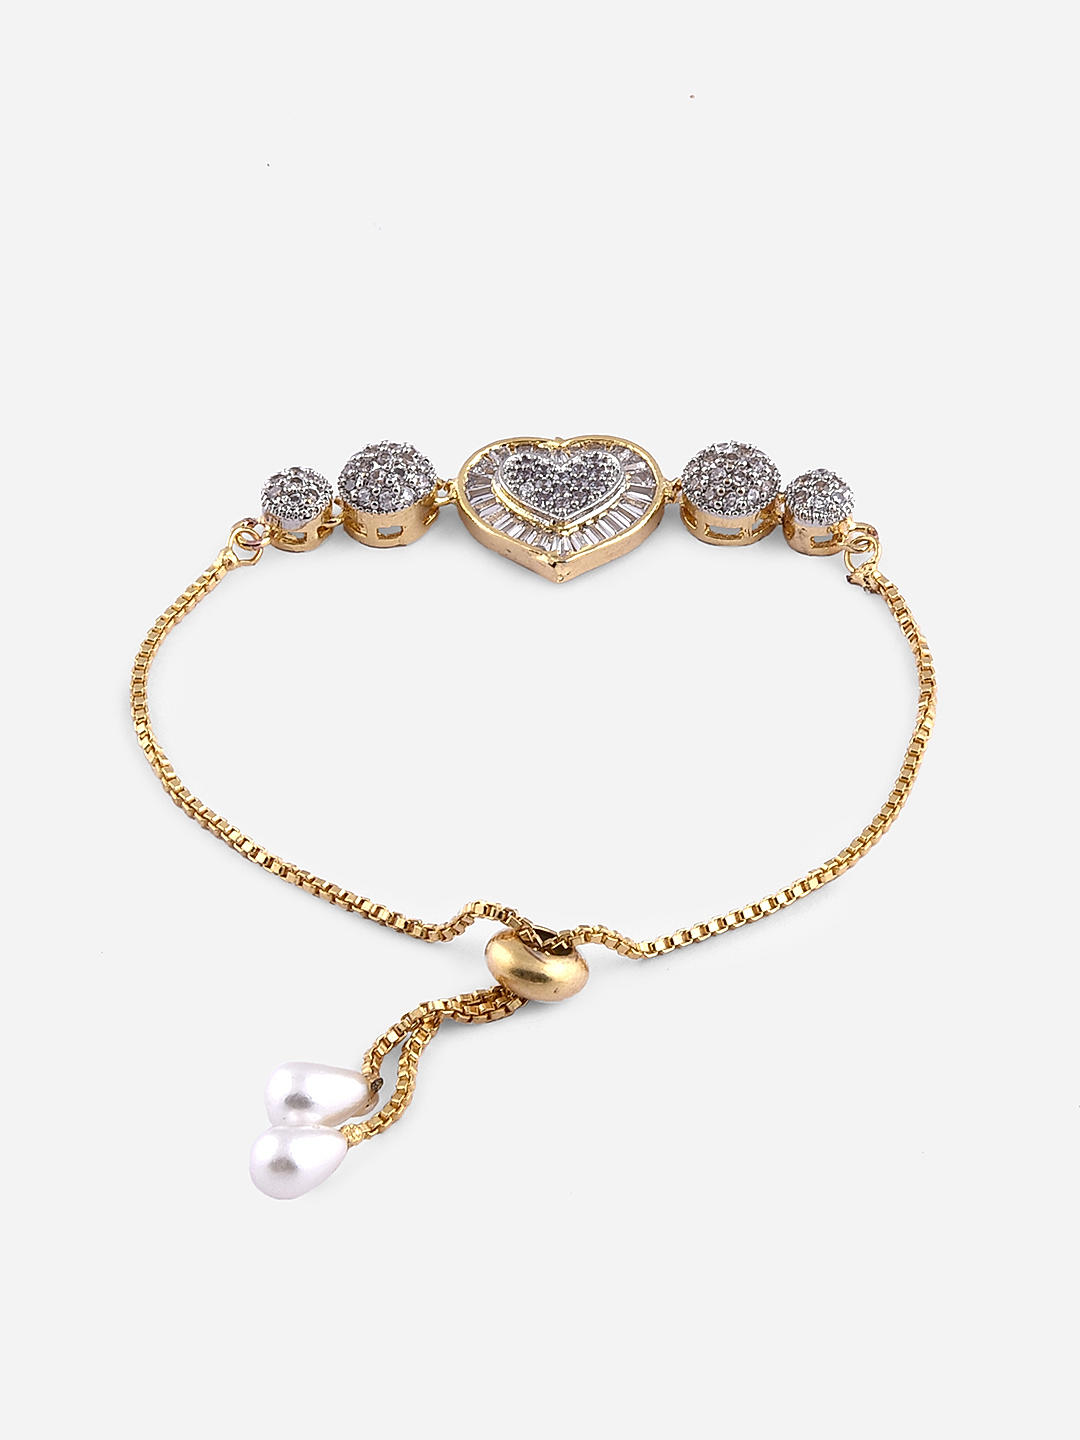 South Indian Jewellery now buy Online HeartShaped Gold Bracelet For Women